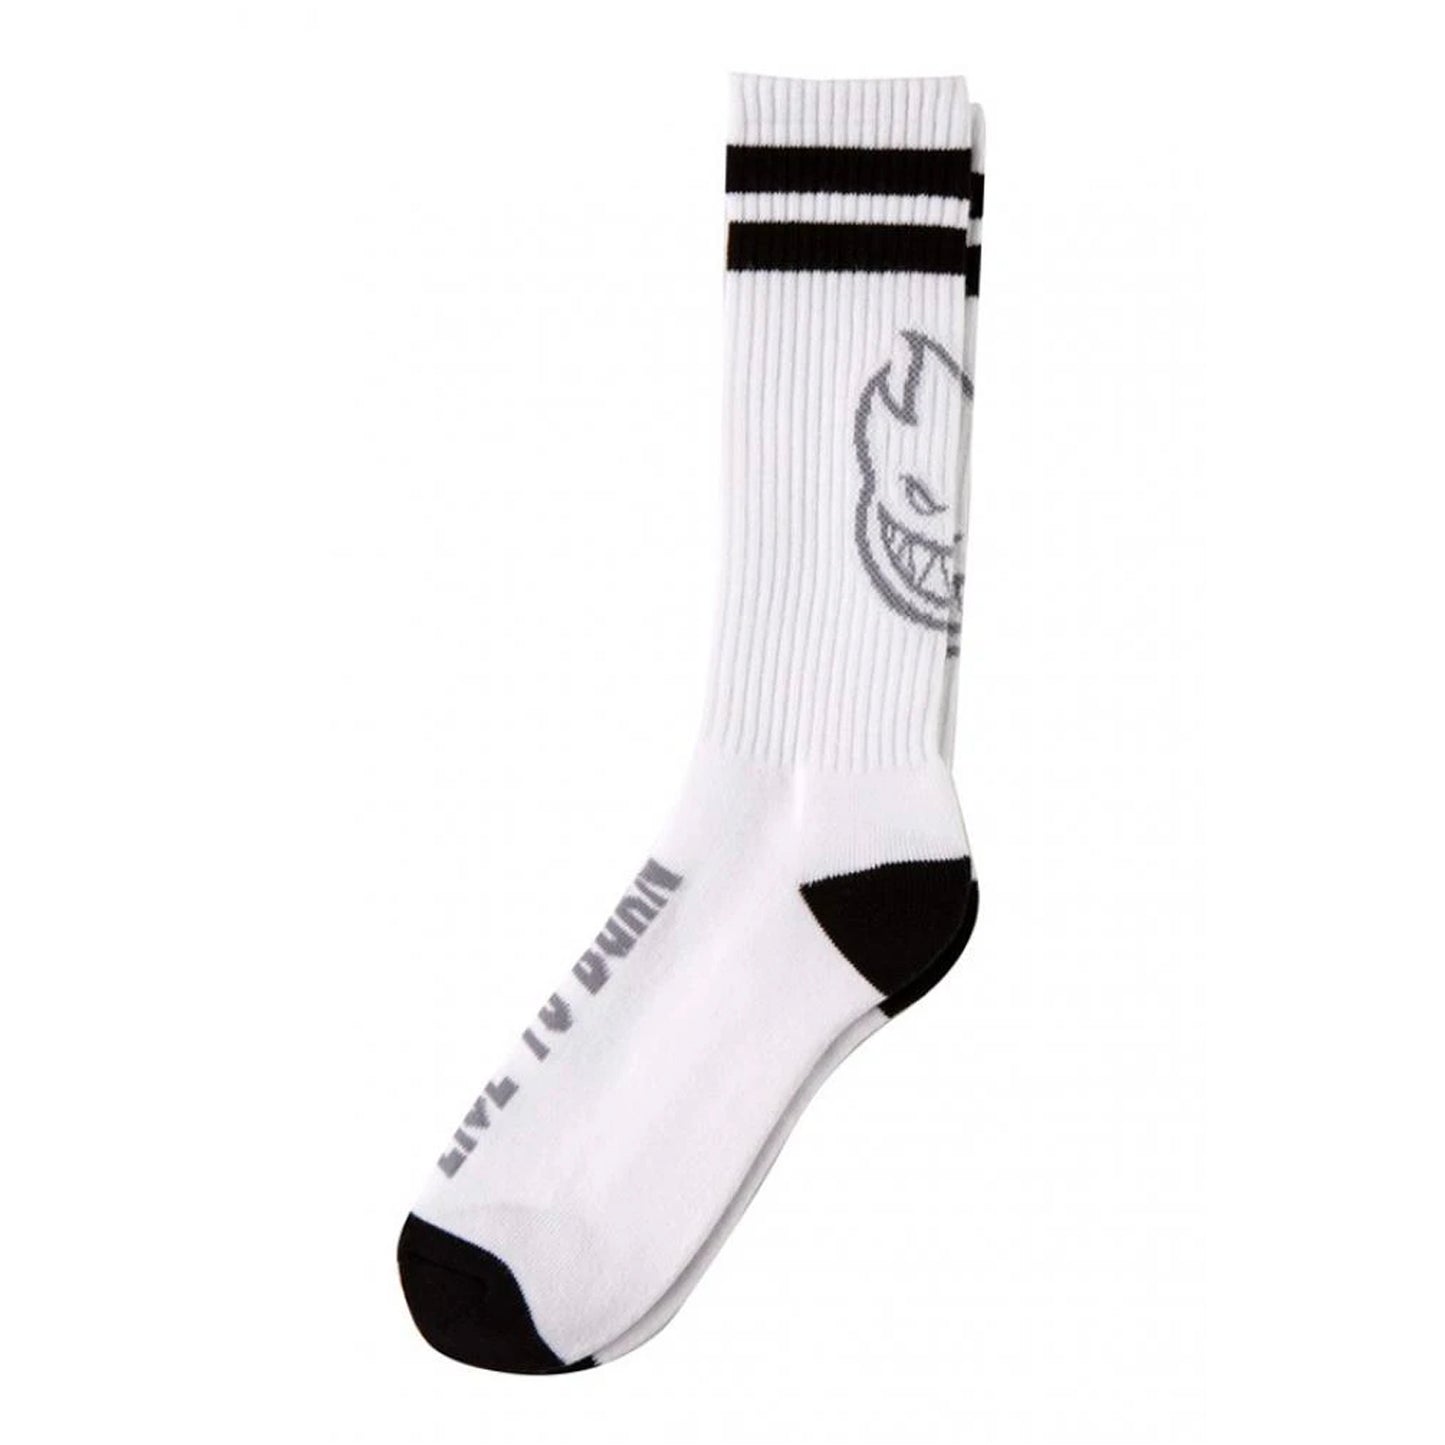 Spitfire Socks Sf Heads Up - White/Black/Grey - Prime Delux Store